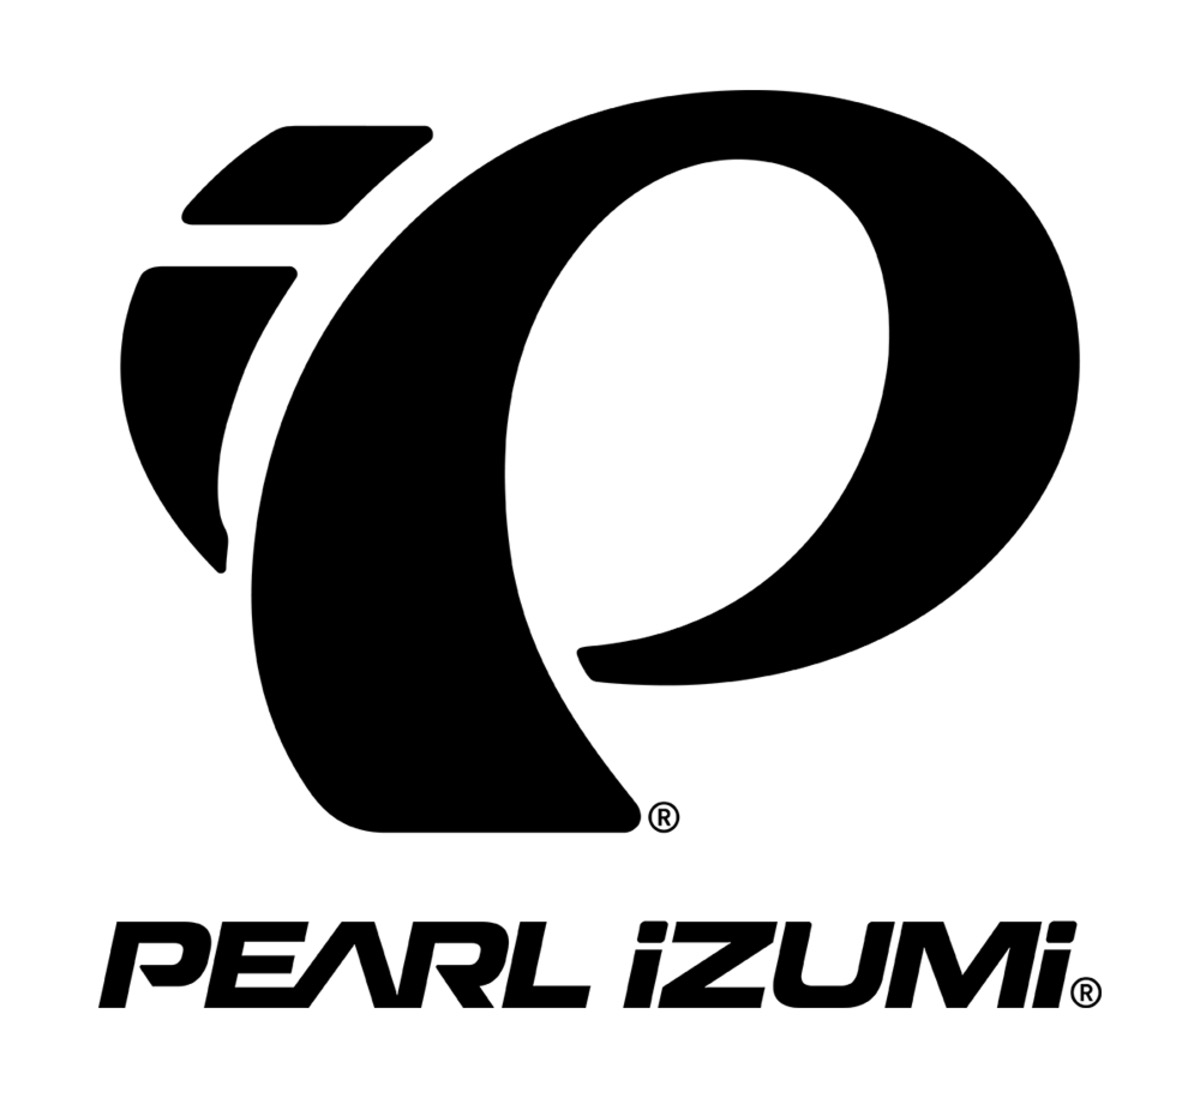 https://www.bicycleretailer.com/sites/default/files/images/article/pearl-izumi-logo-1200x1098.jpg